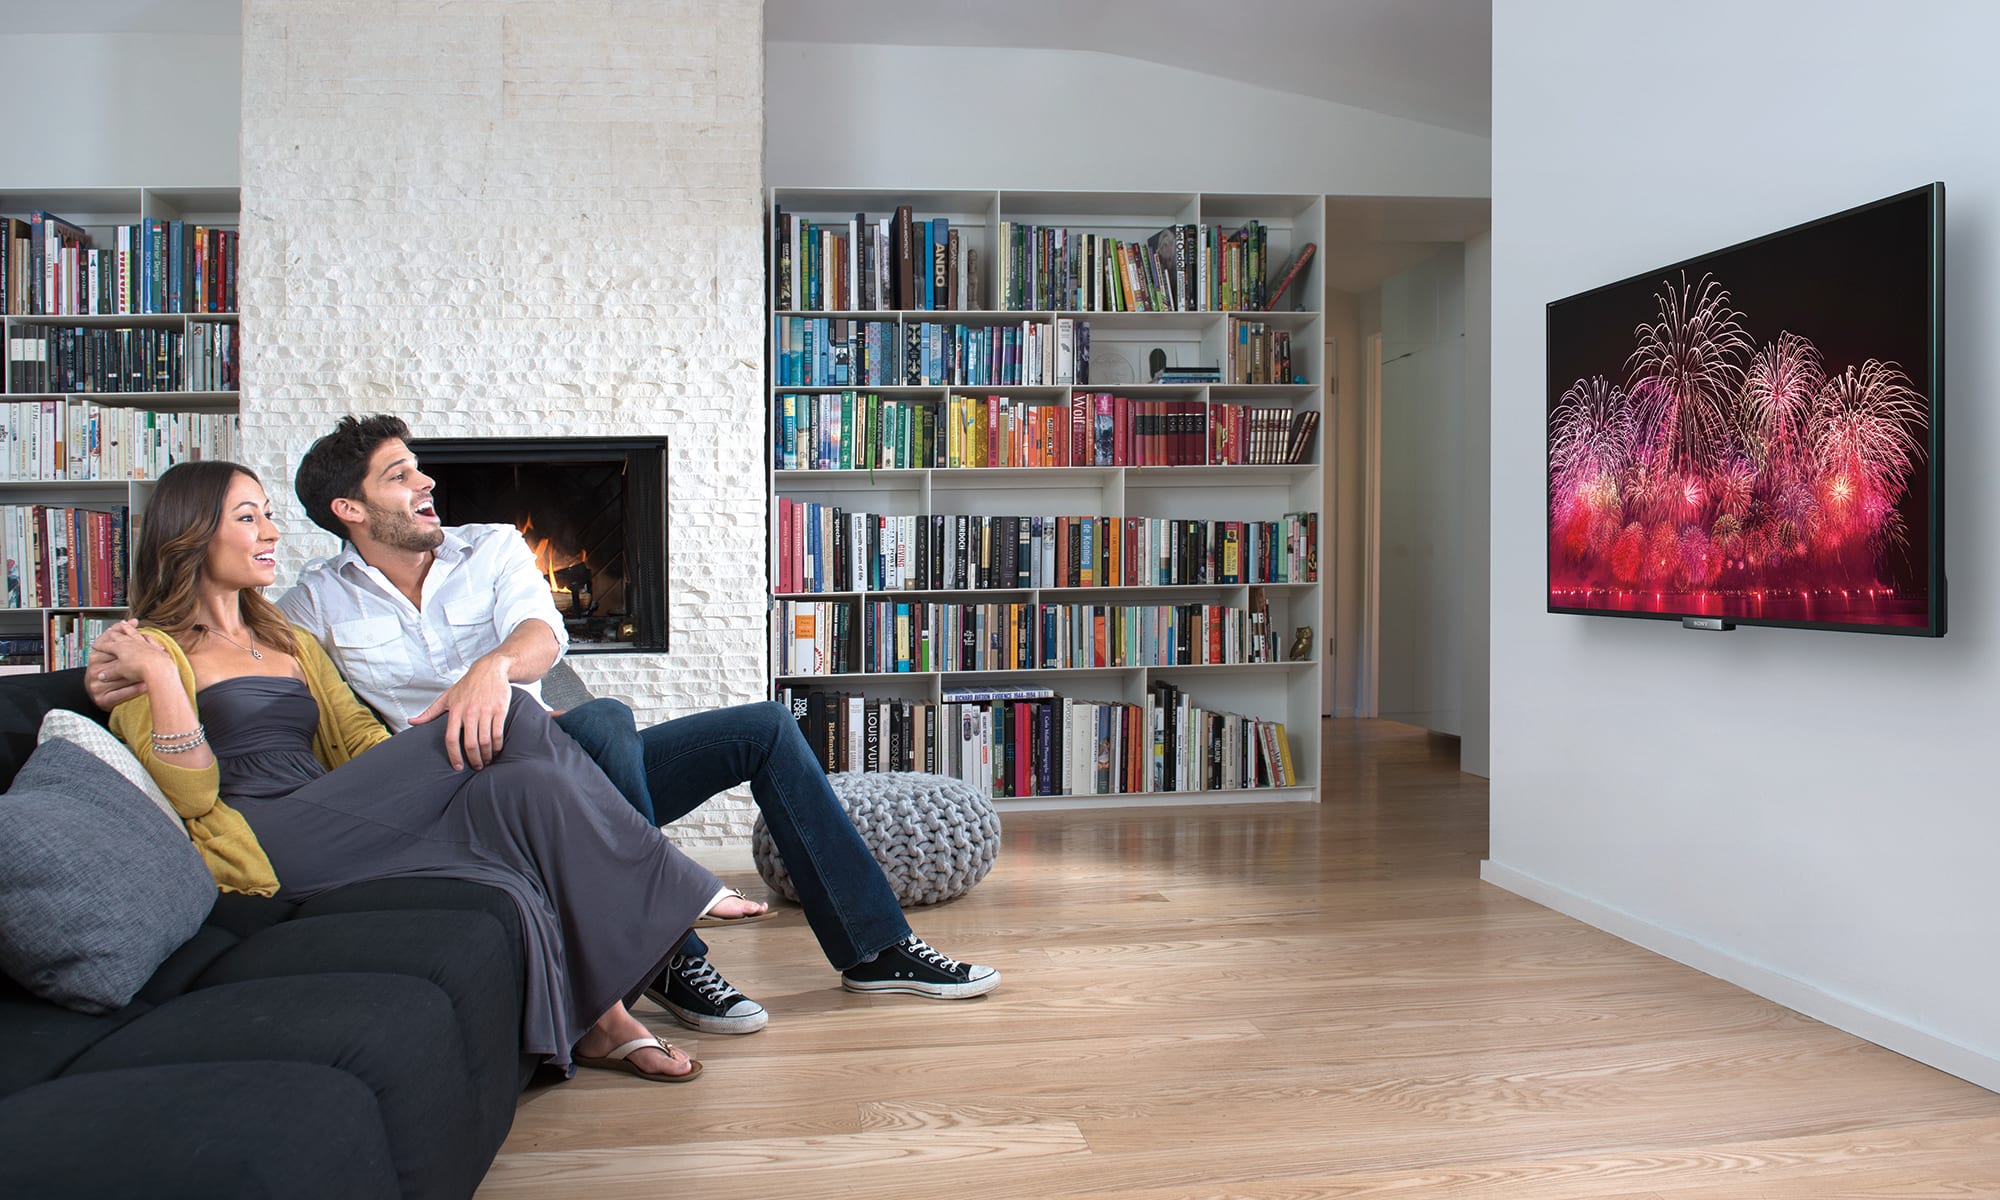 32 Tv Big Enough For Living Room